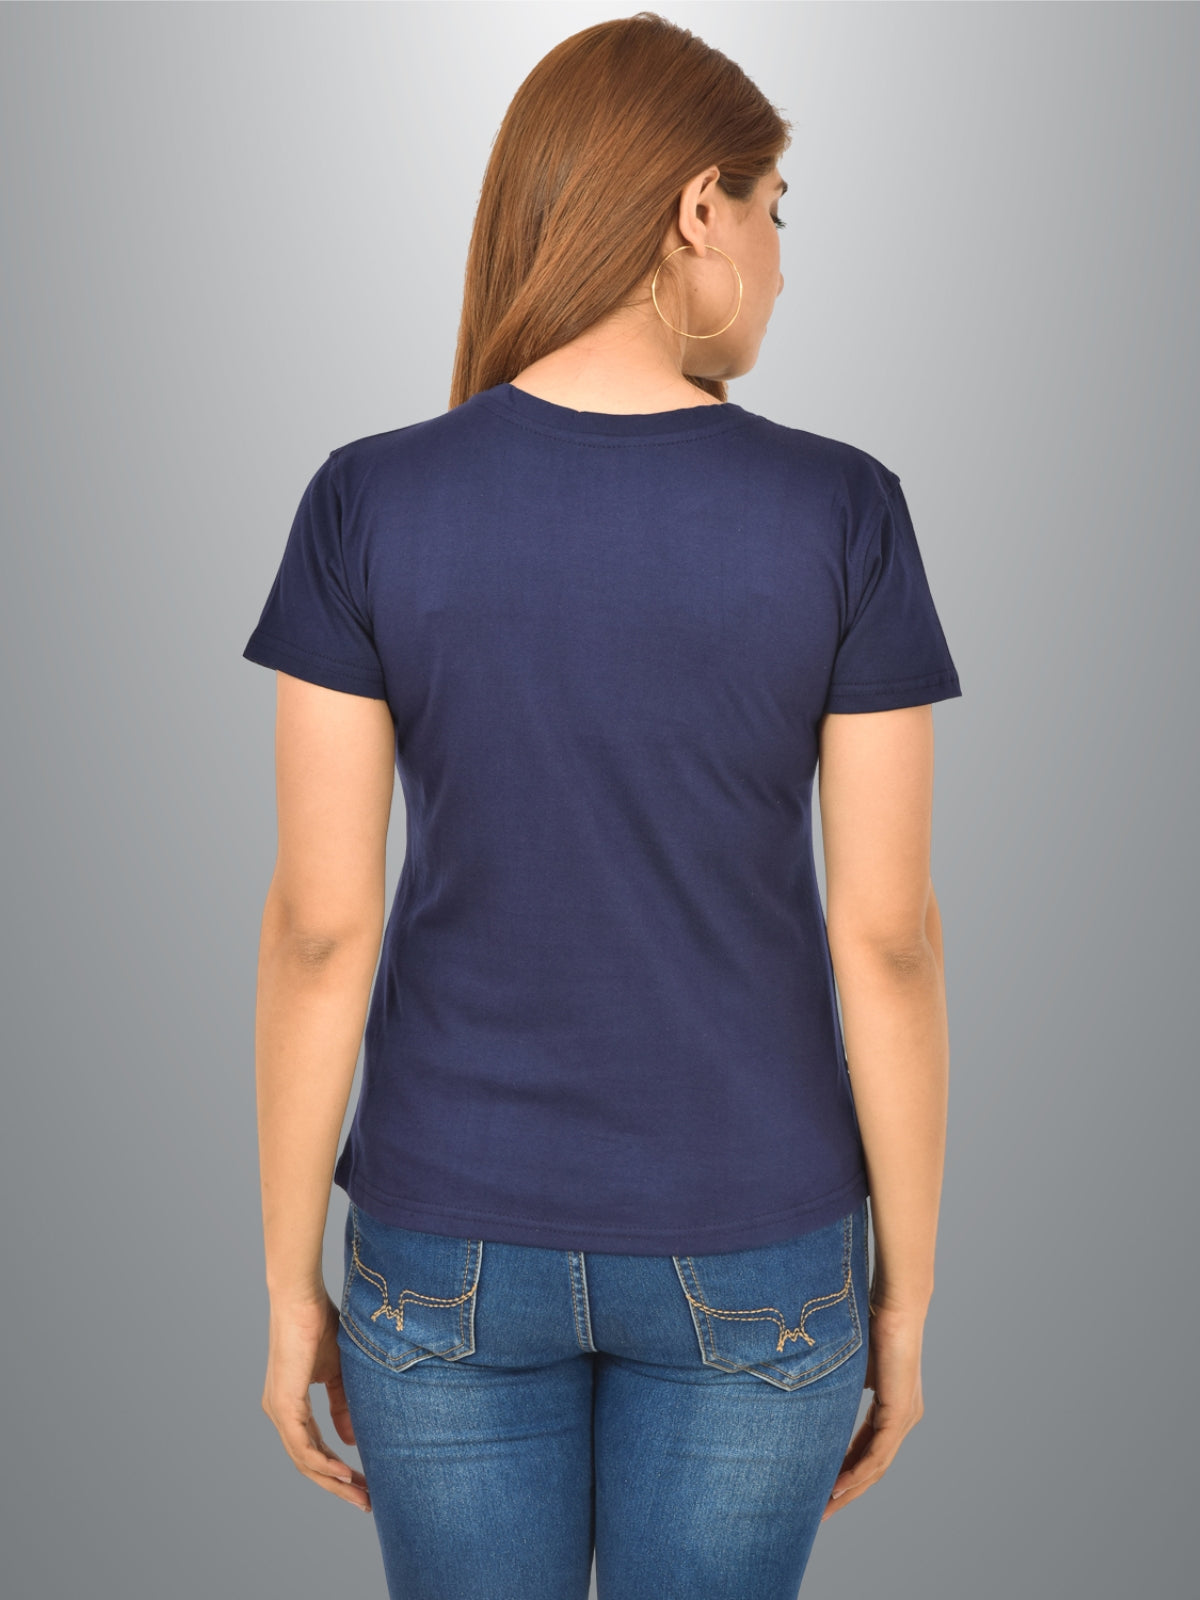 Womens Navy Blue Half Sleeves Cotton Plain T-shirt